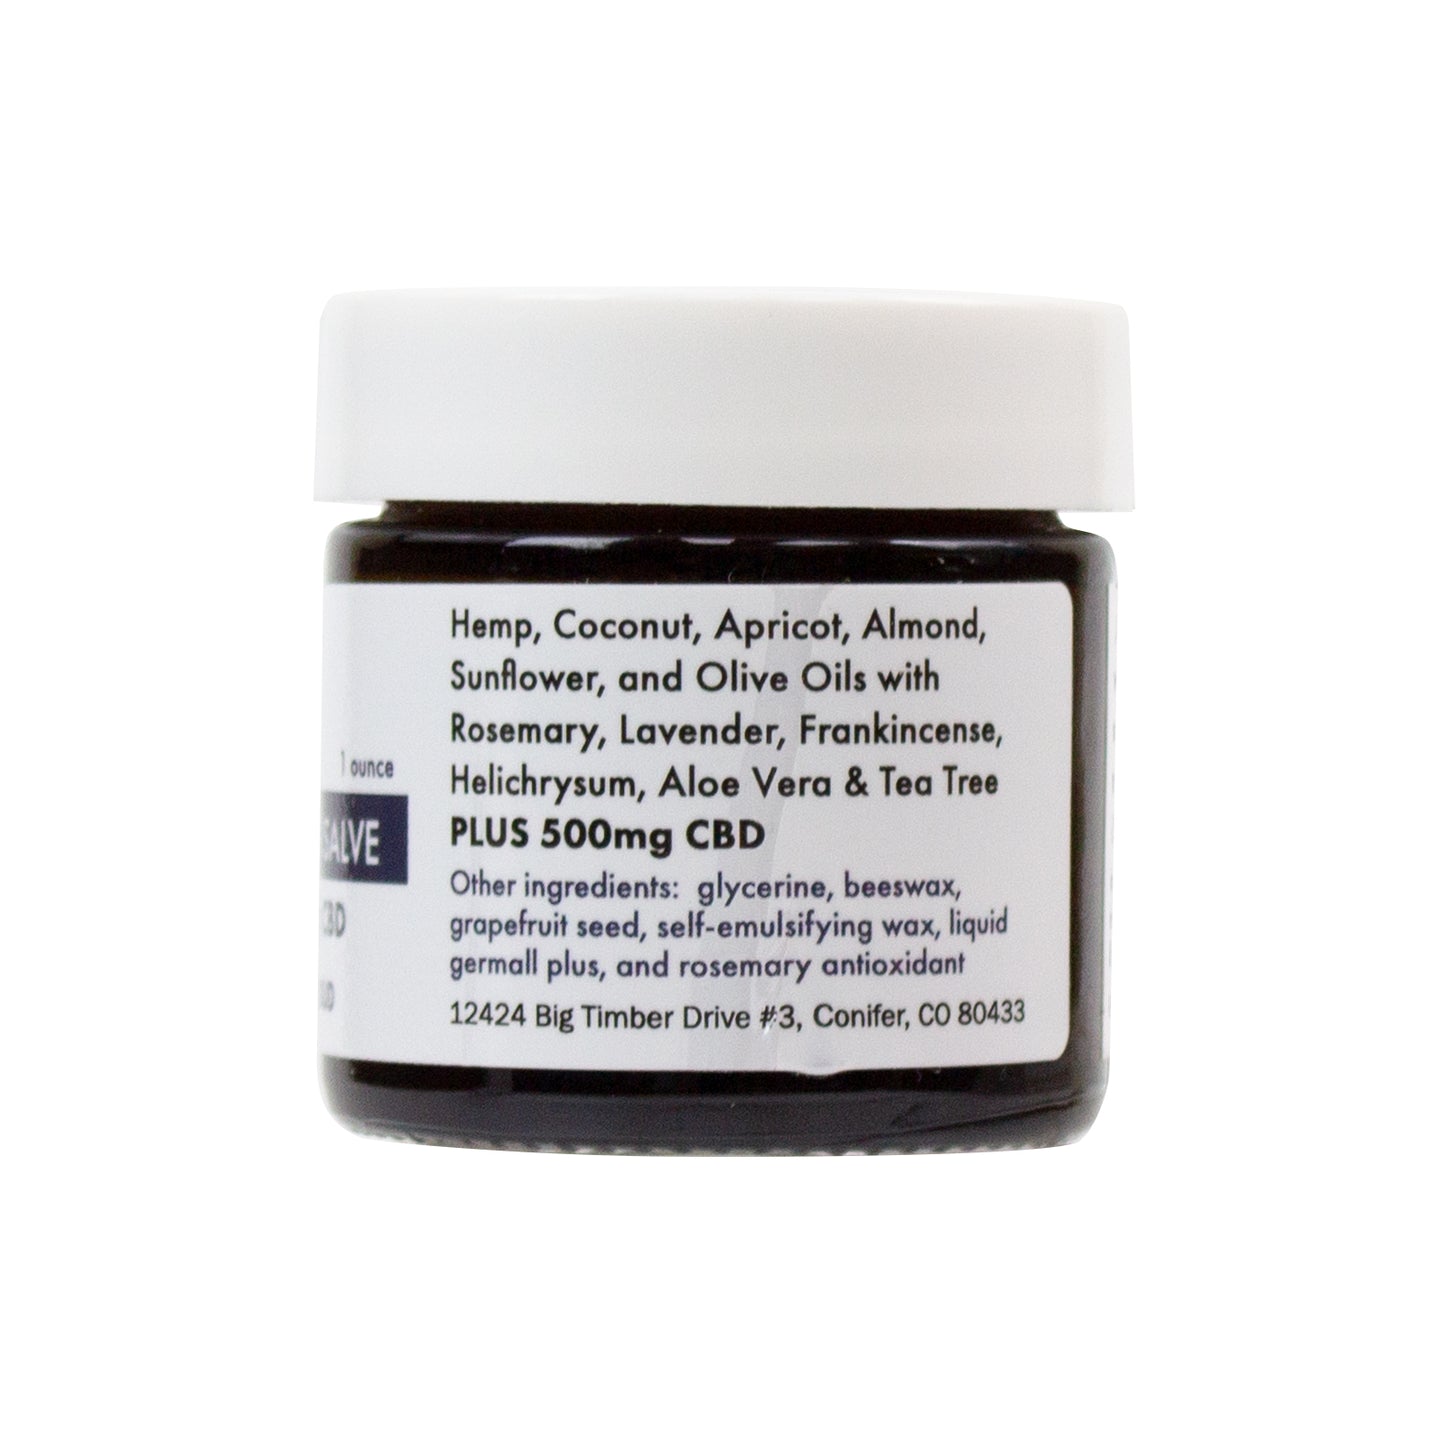 Fountain Of Health CBD Oil Skin Soothing Salve 1 Oz 500 Mg